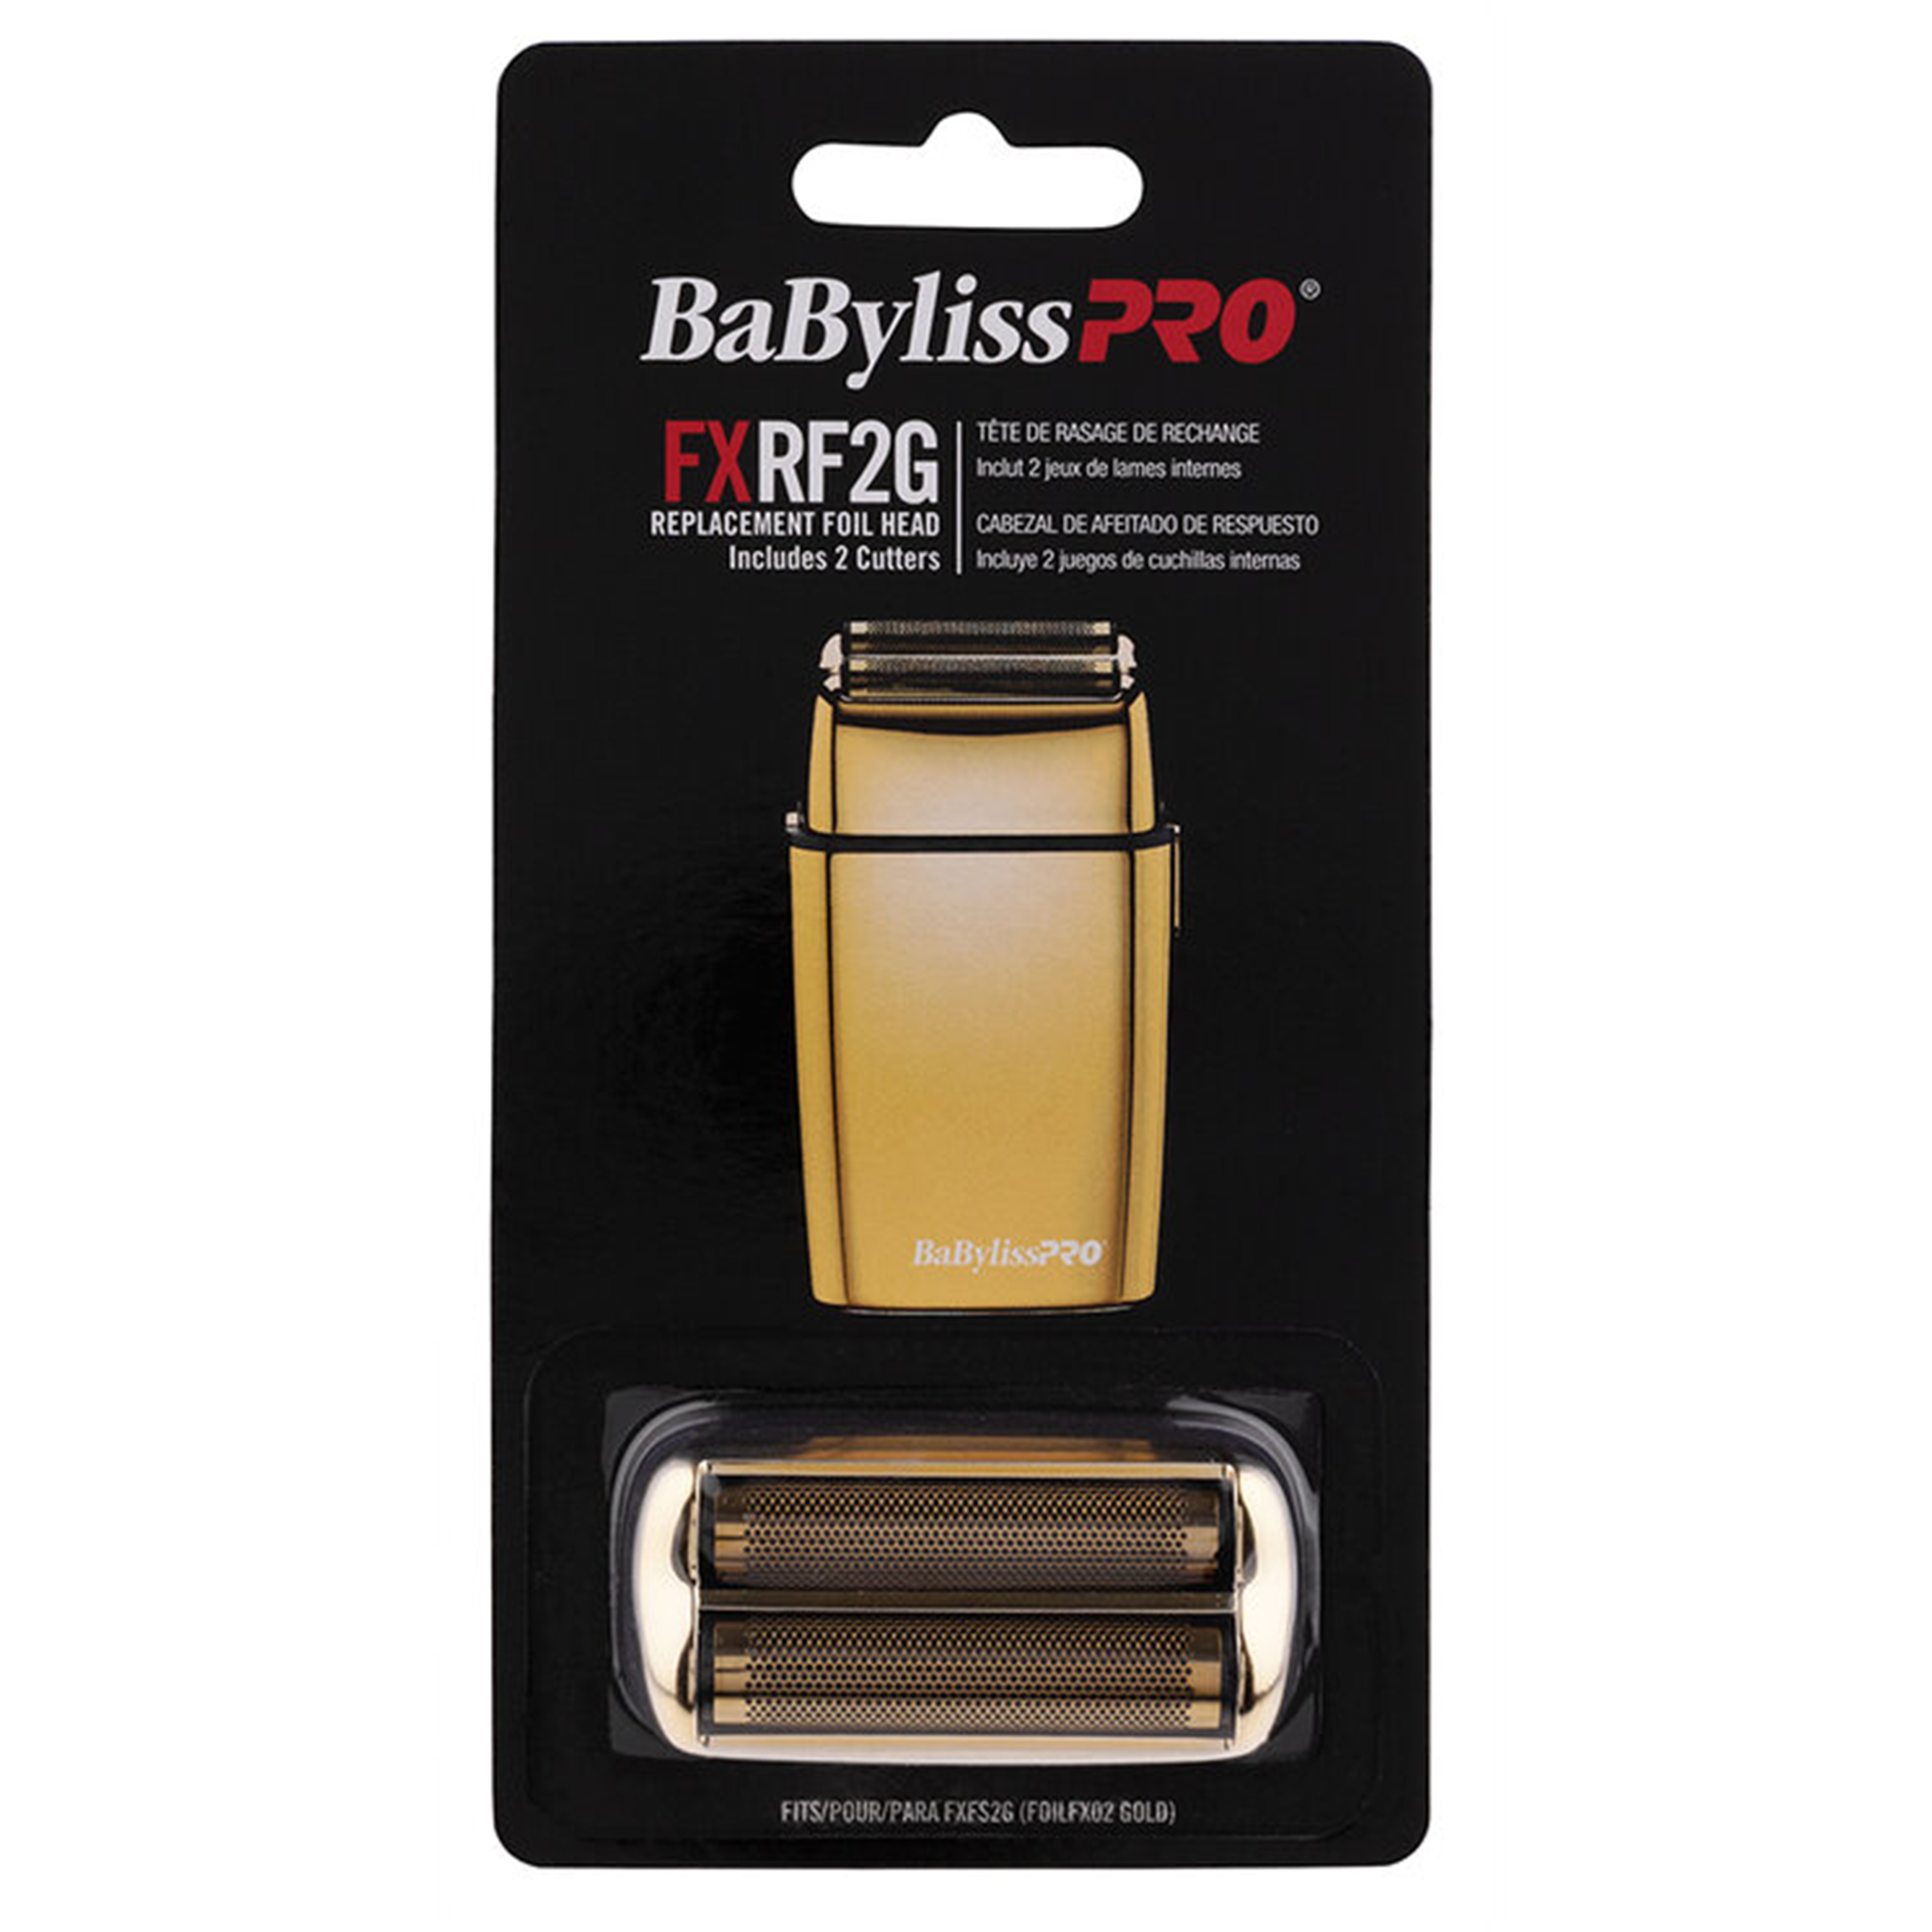 BabylissPRO Gold FoilFX02 Shaver Replacement Foil Head FXRF2G